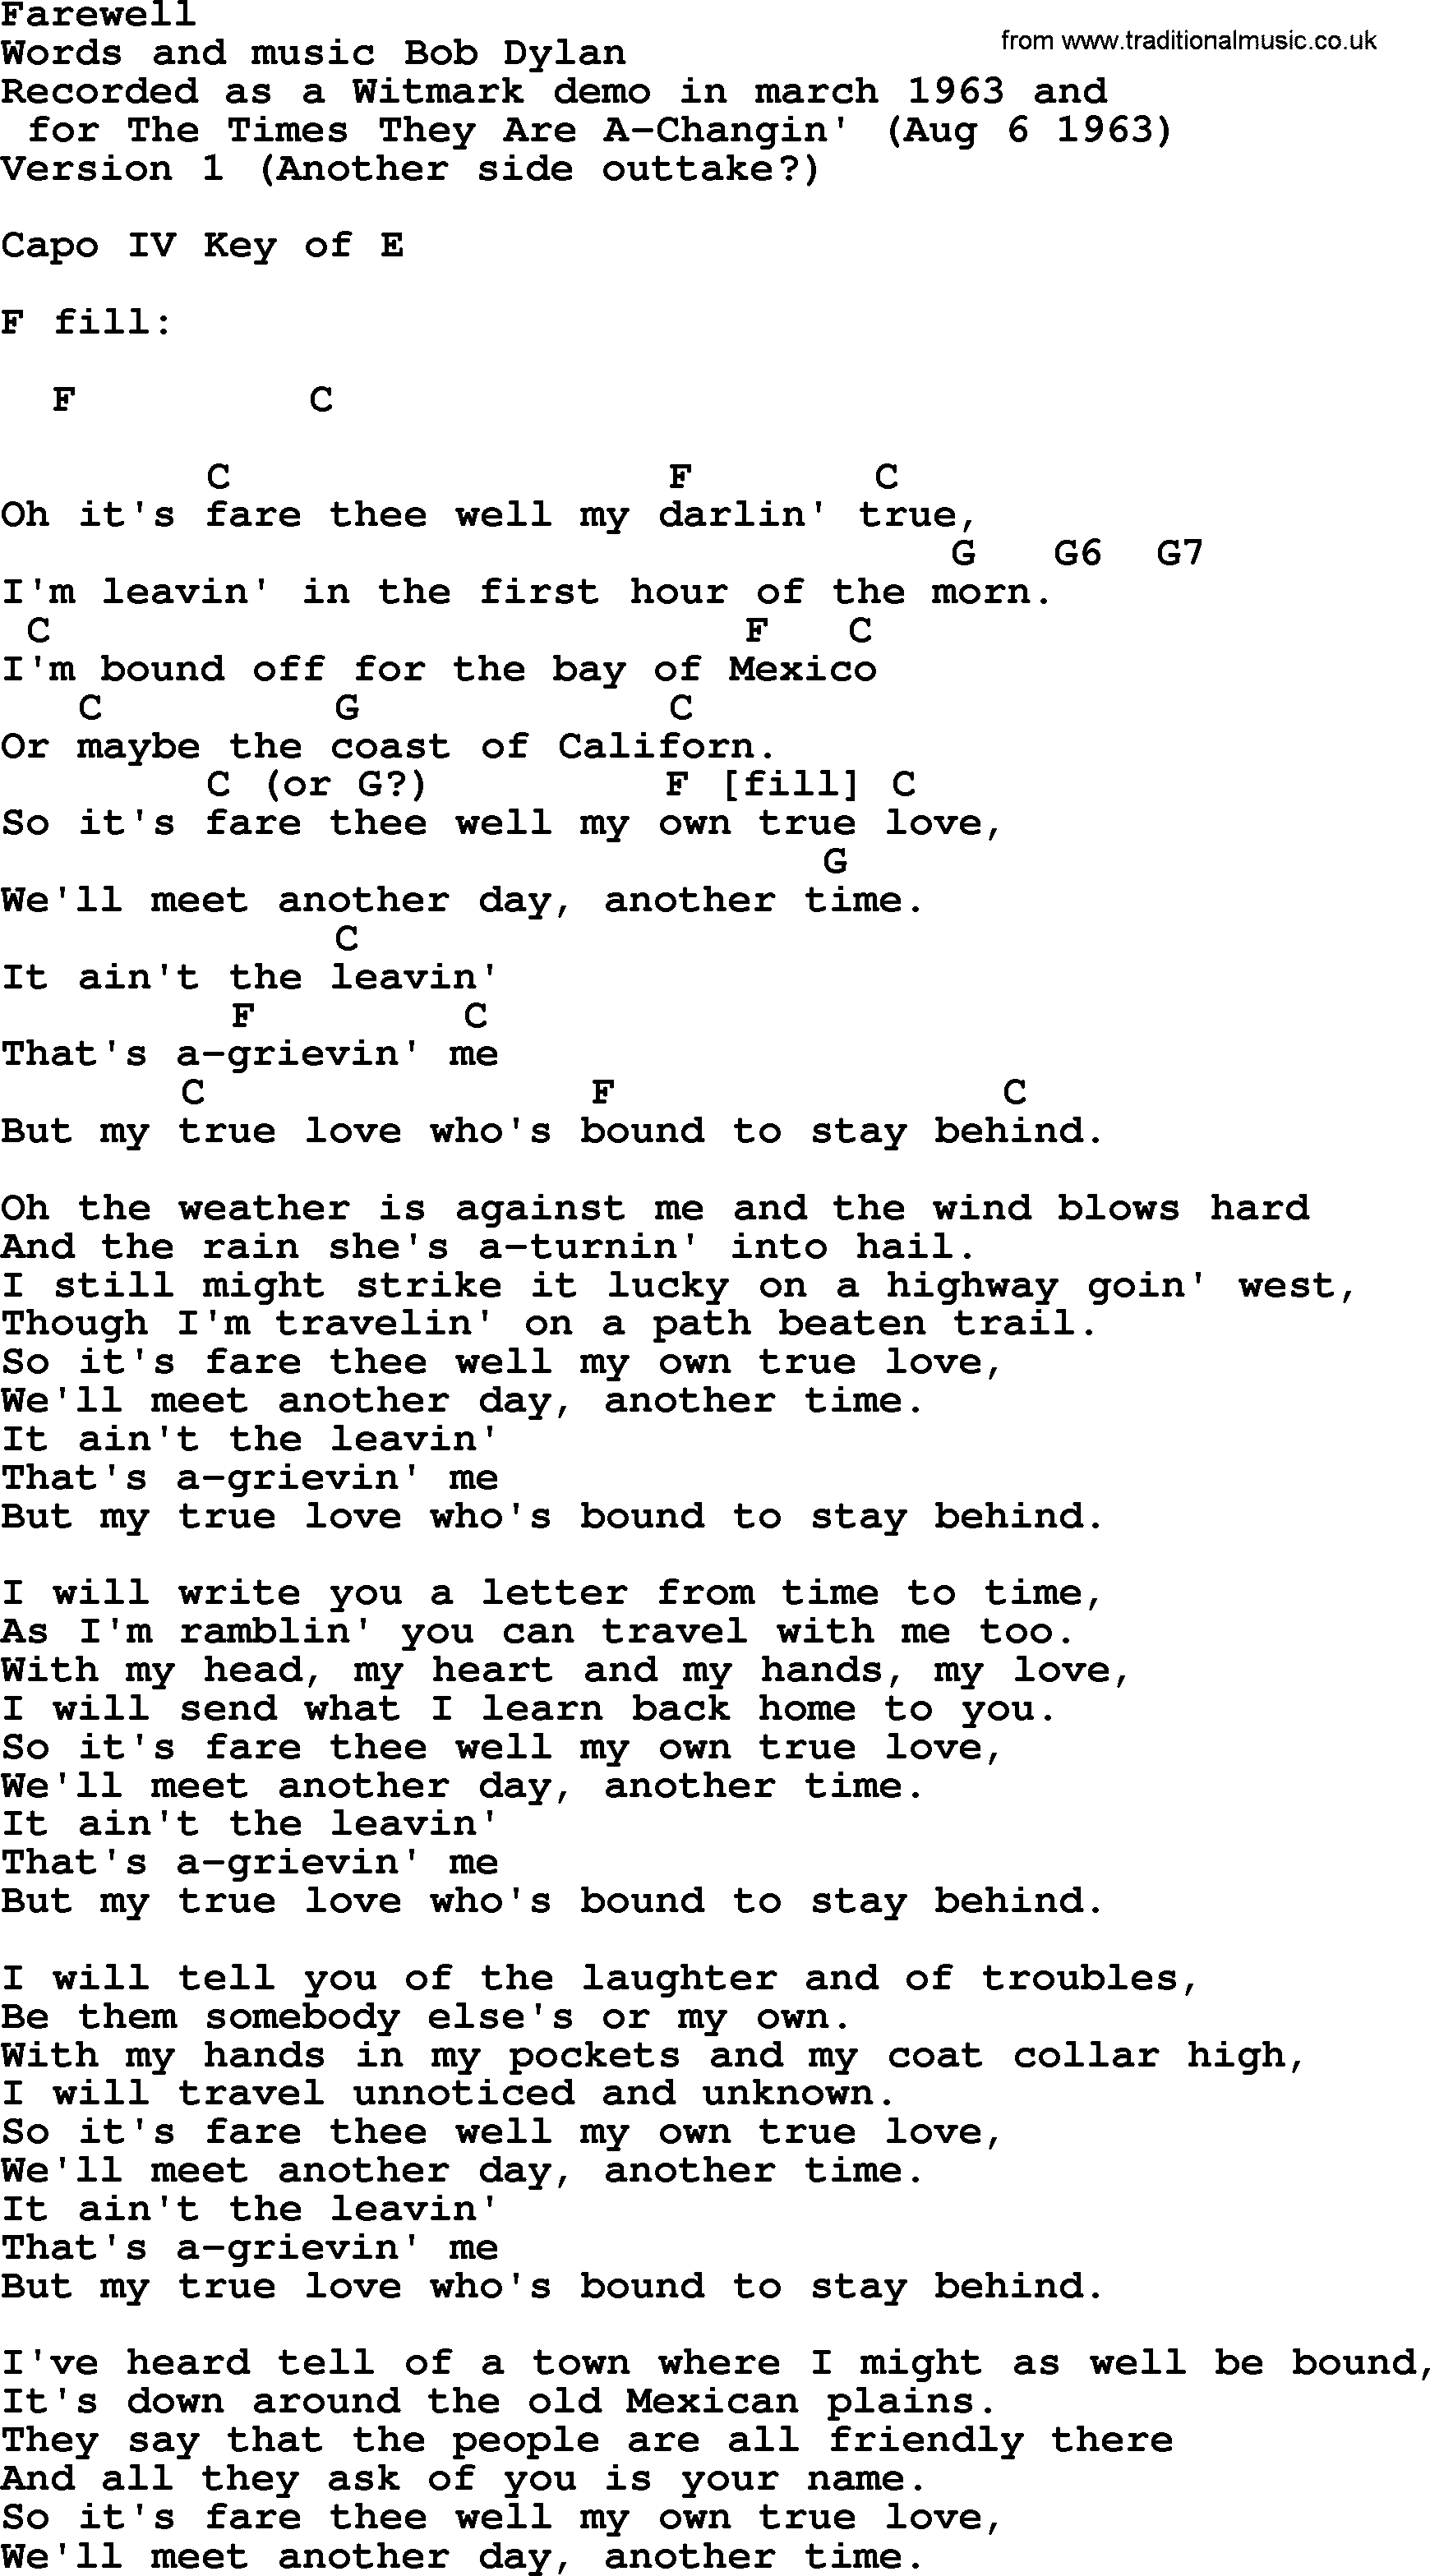 Bob Dylan song, lyrics with chords - Farewell